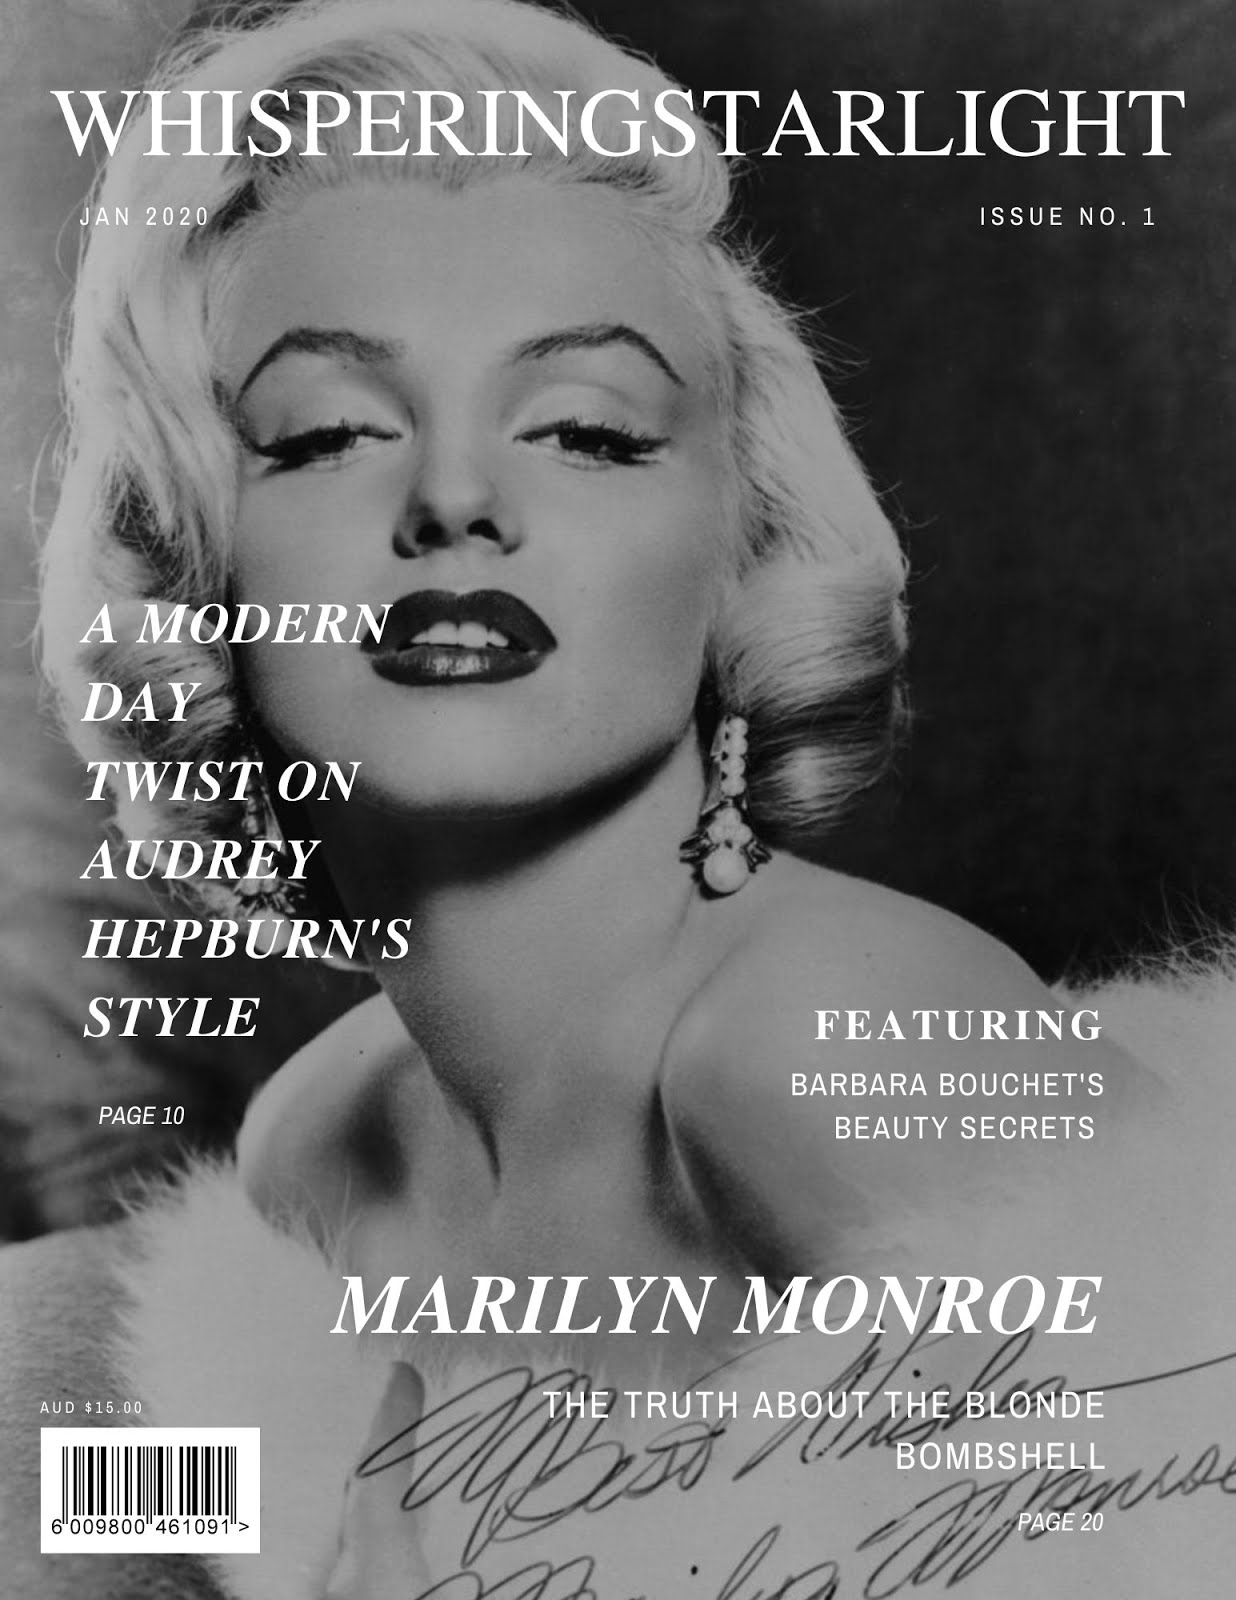 Issue No. 1, January 2020